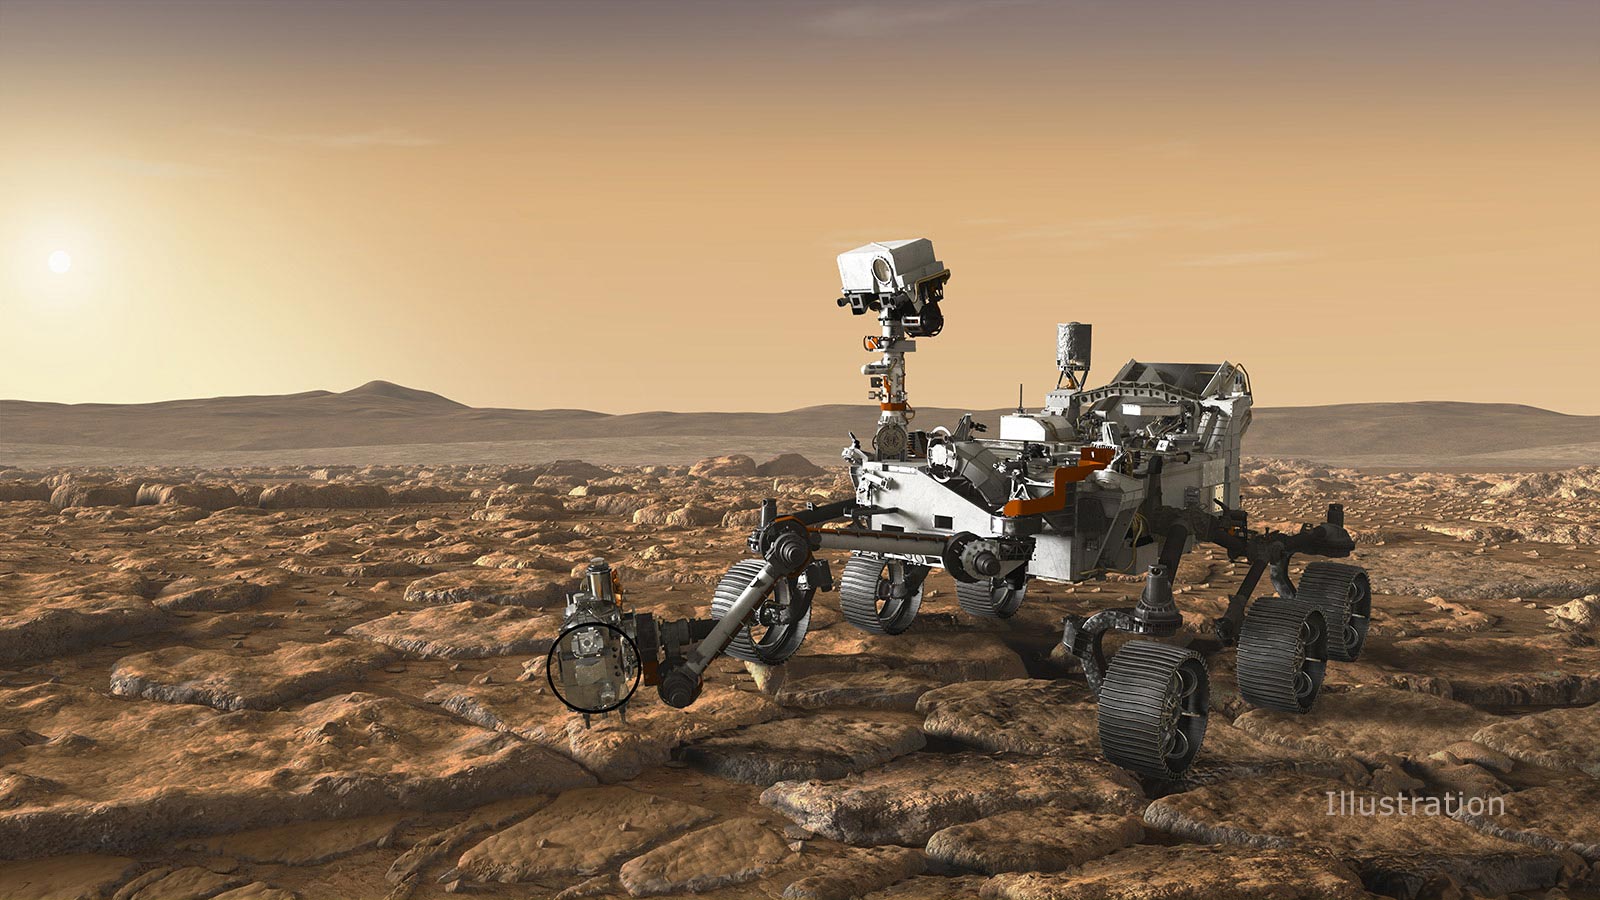 život na Marsu?  Rover Perseverance NASA našel důkazy o různých organických sloučeninách